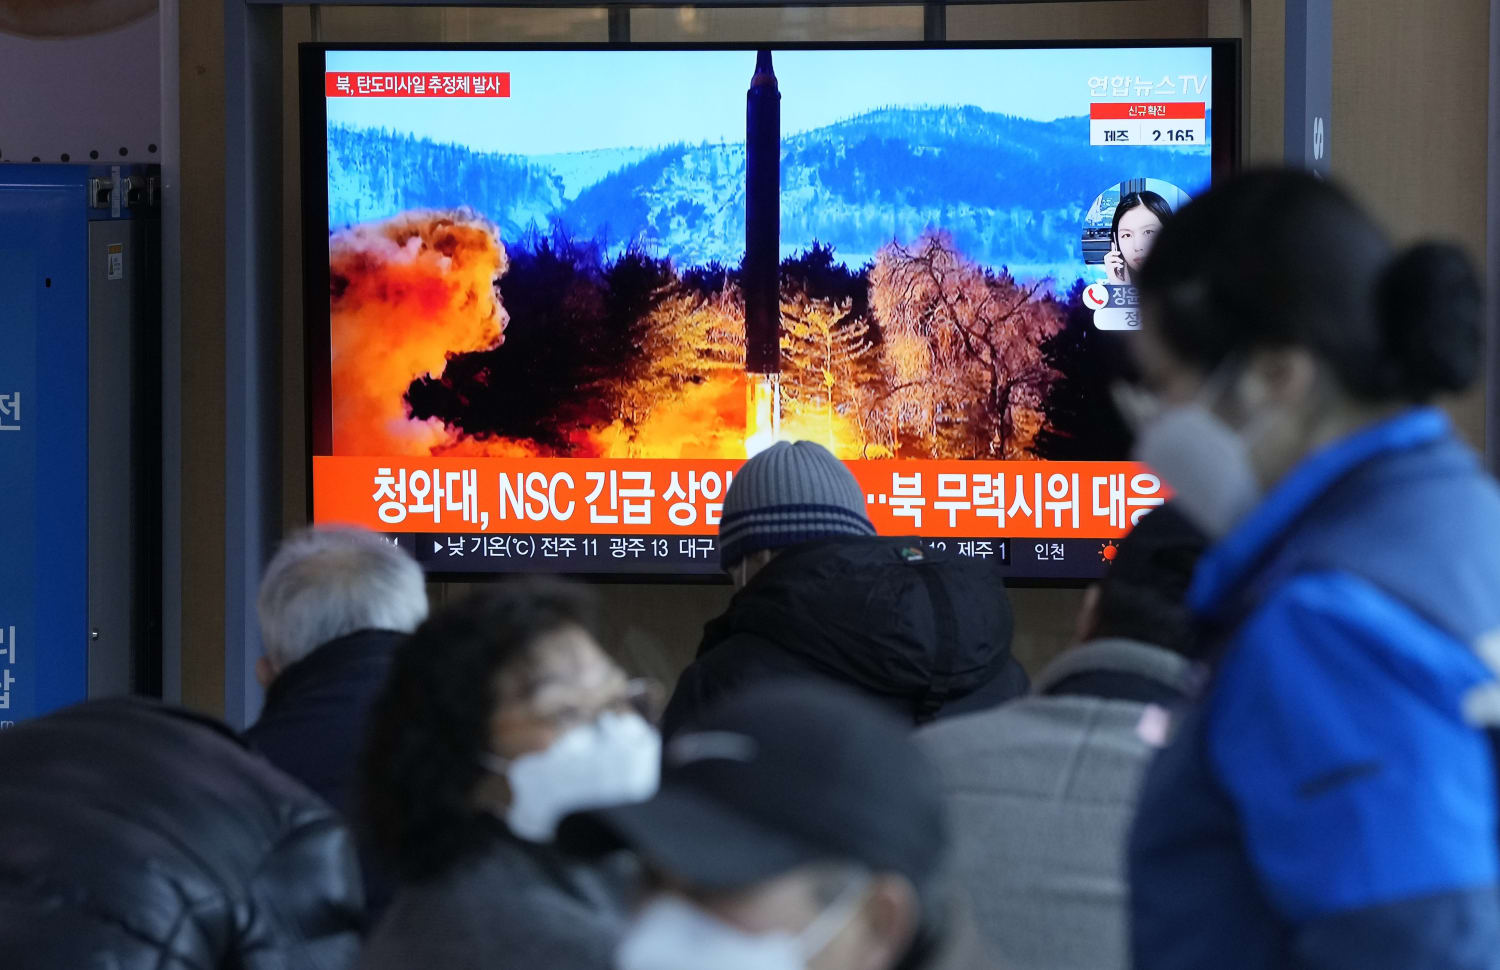 North Korea fires suspected ballistic missile into sea